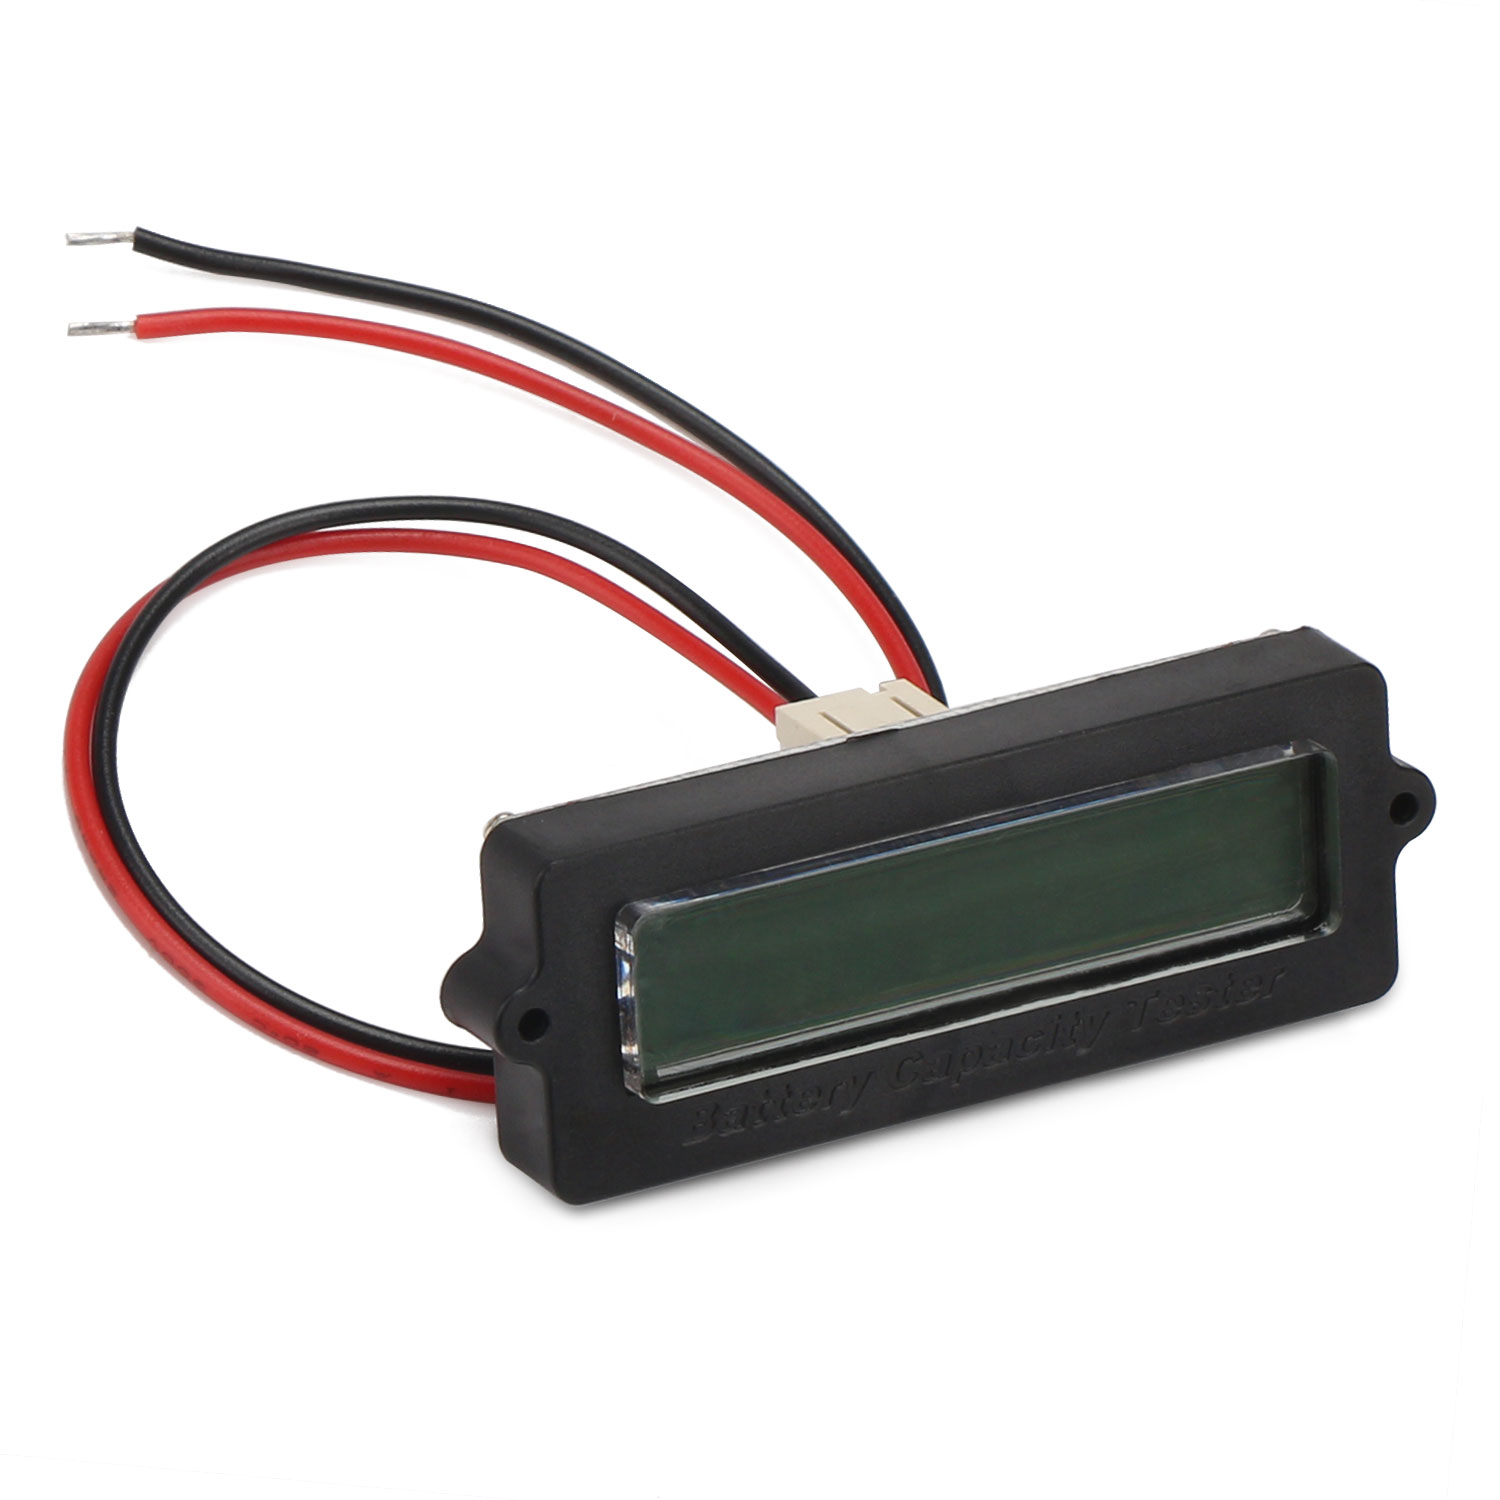  IPX7 Waterproof Battery Monitor Tester 12v 24v 36v 48v 60v  72v,Car Motorcycle Golf cart Battery Meter Digital Battery Capacity  Remaining Capacity Percentage Tester with Buzzer Alarm and Temperature :  Automotive